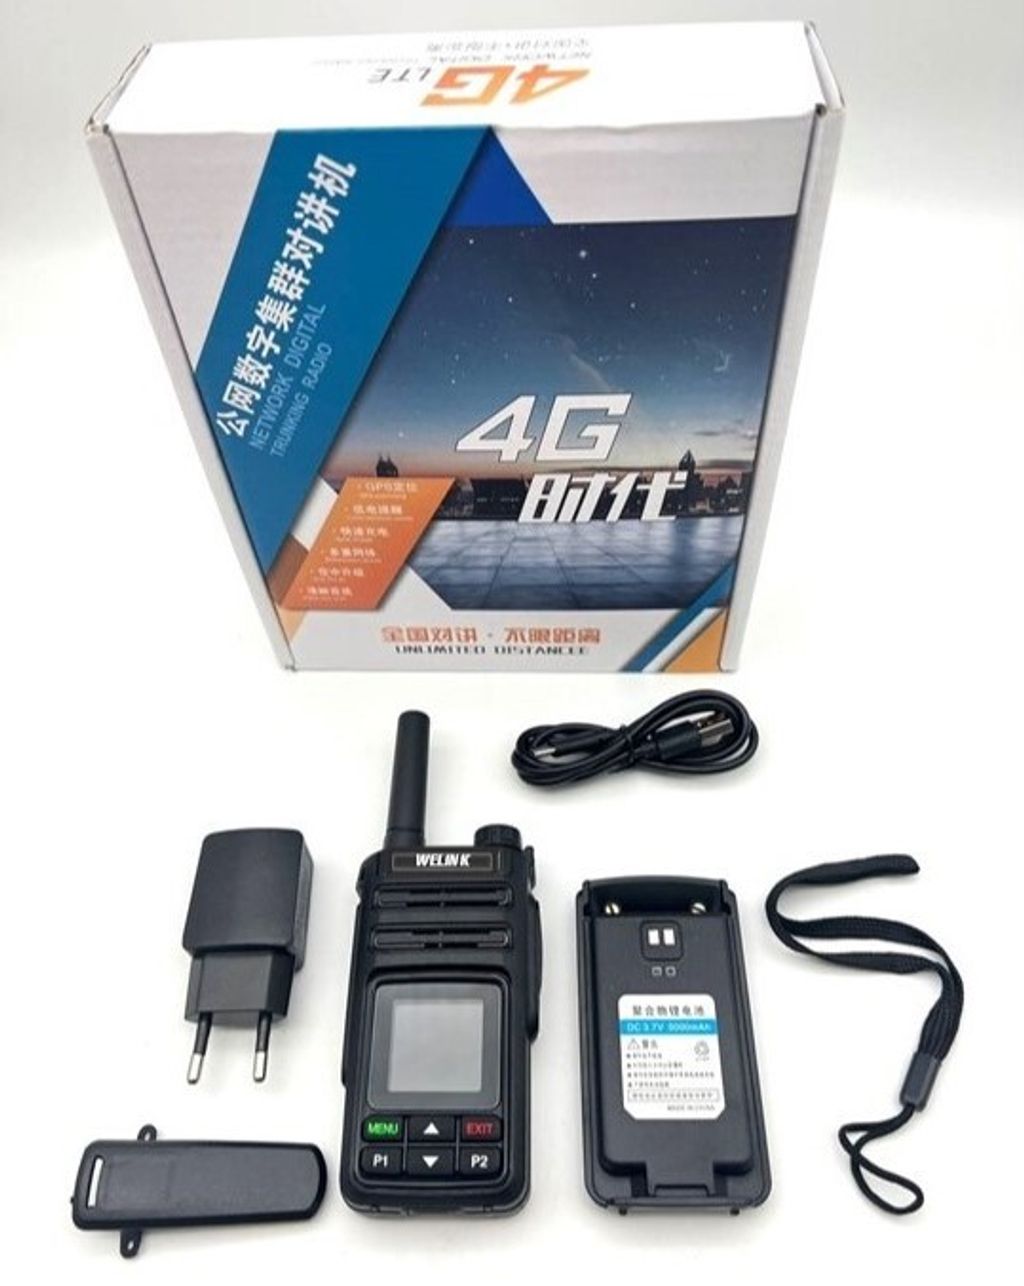 Welink J8 4G WCDMA walkie talkie – Hotdeal Store